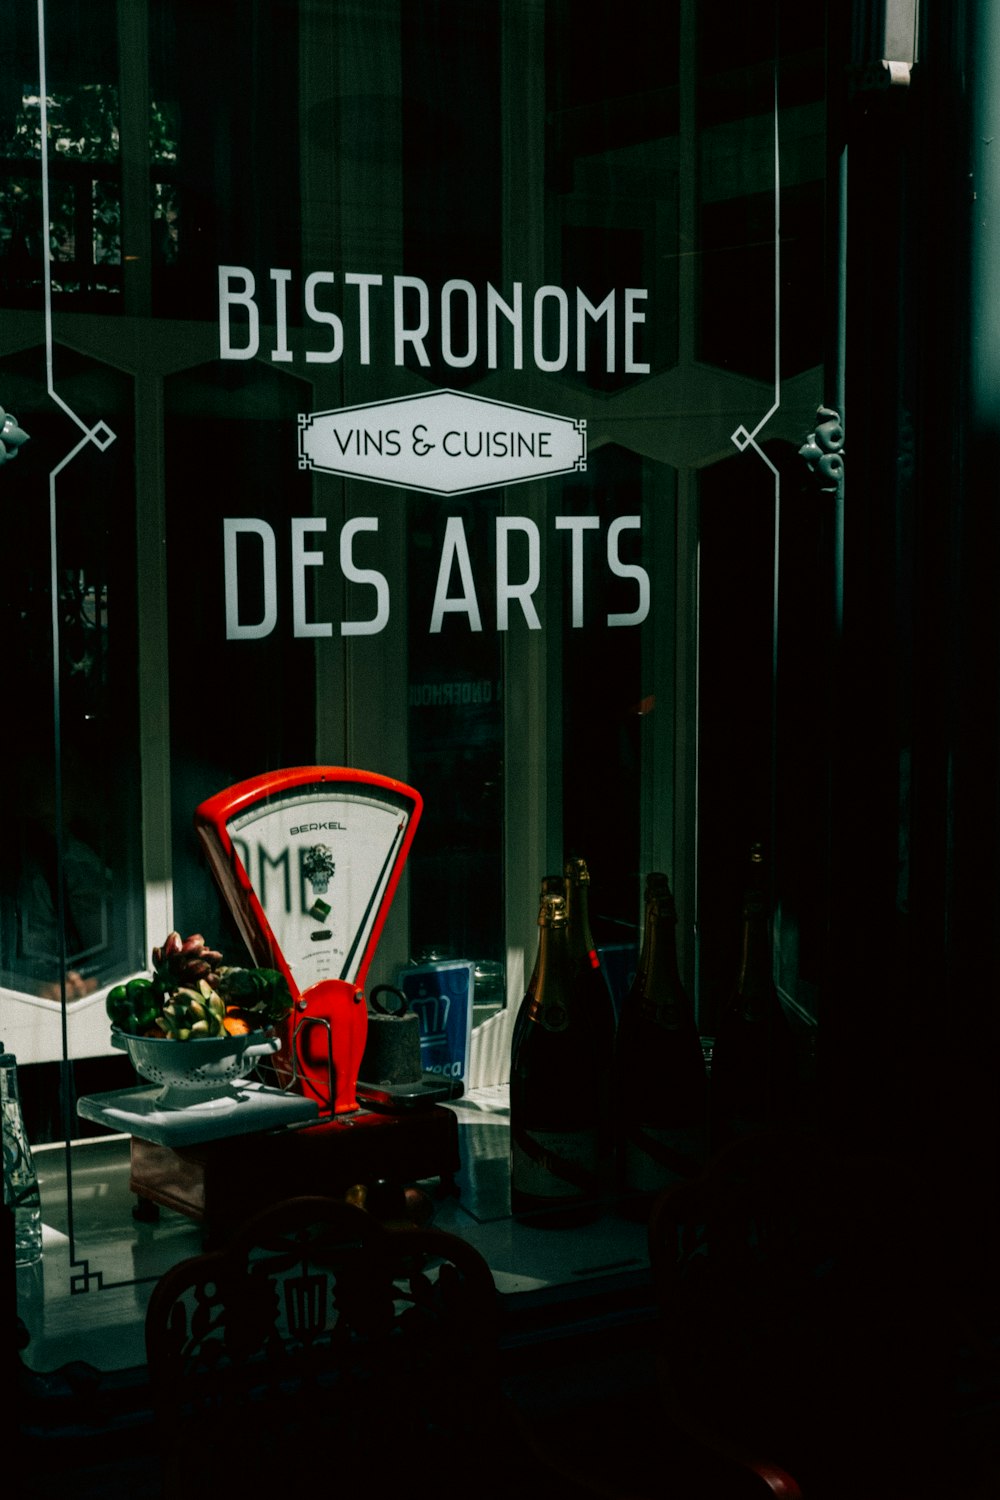 vBistronome Des Arts sticker on glass wall